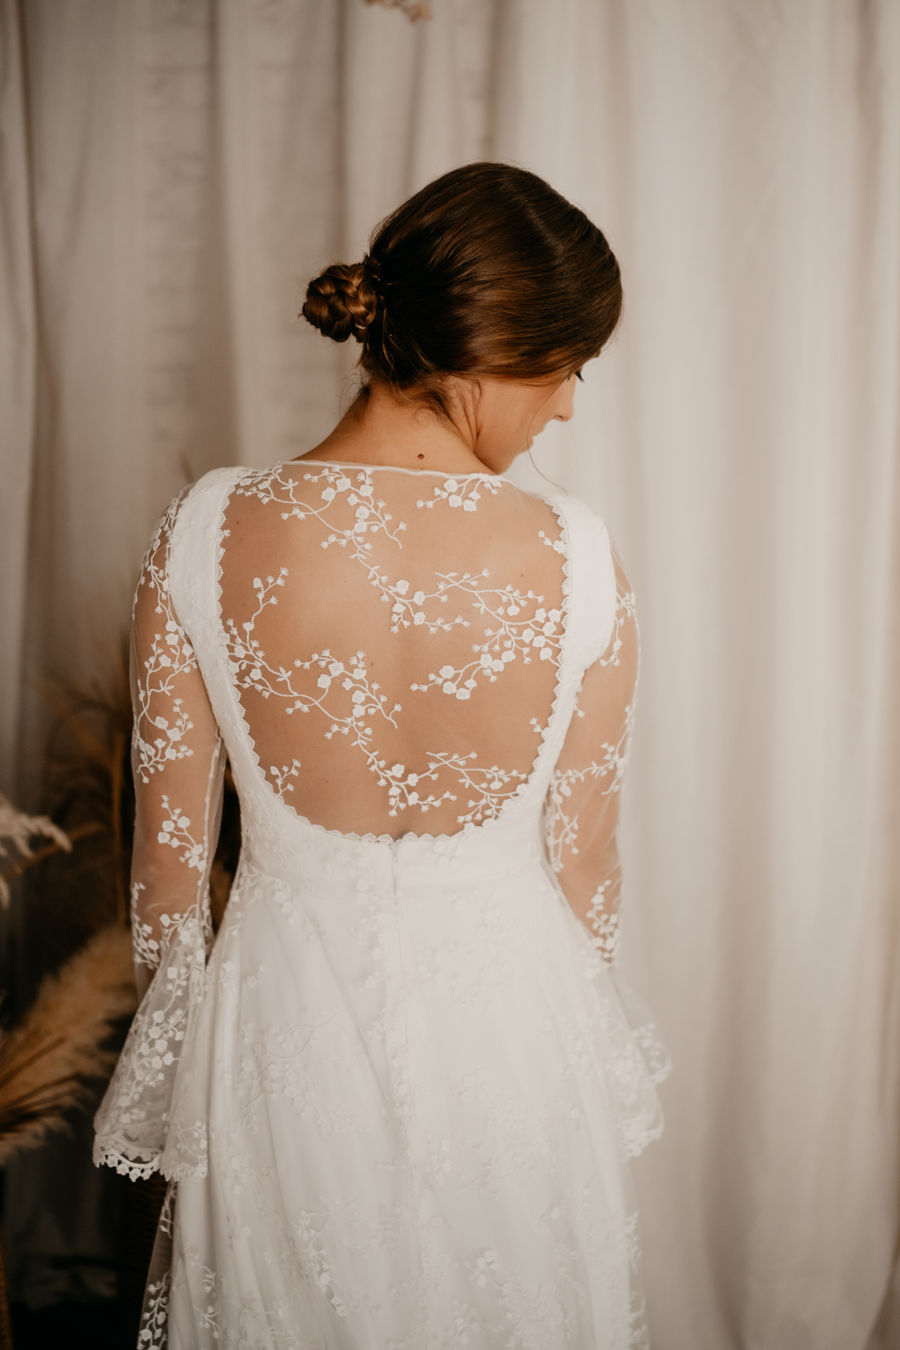 Bridal dresses. Girona wedding dresses. Stunning wedding dresses.